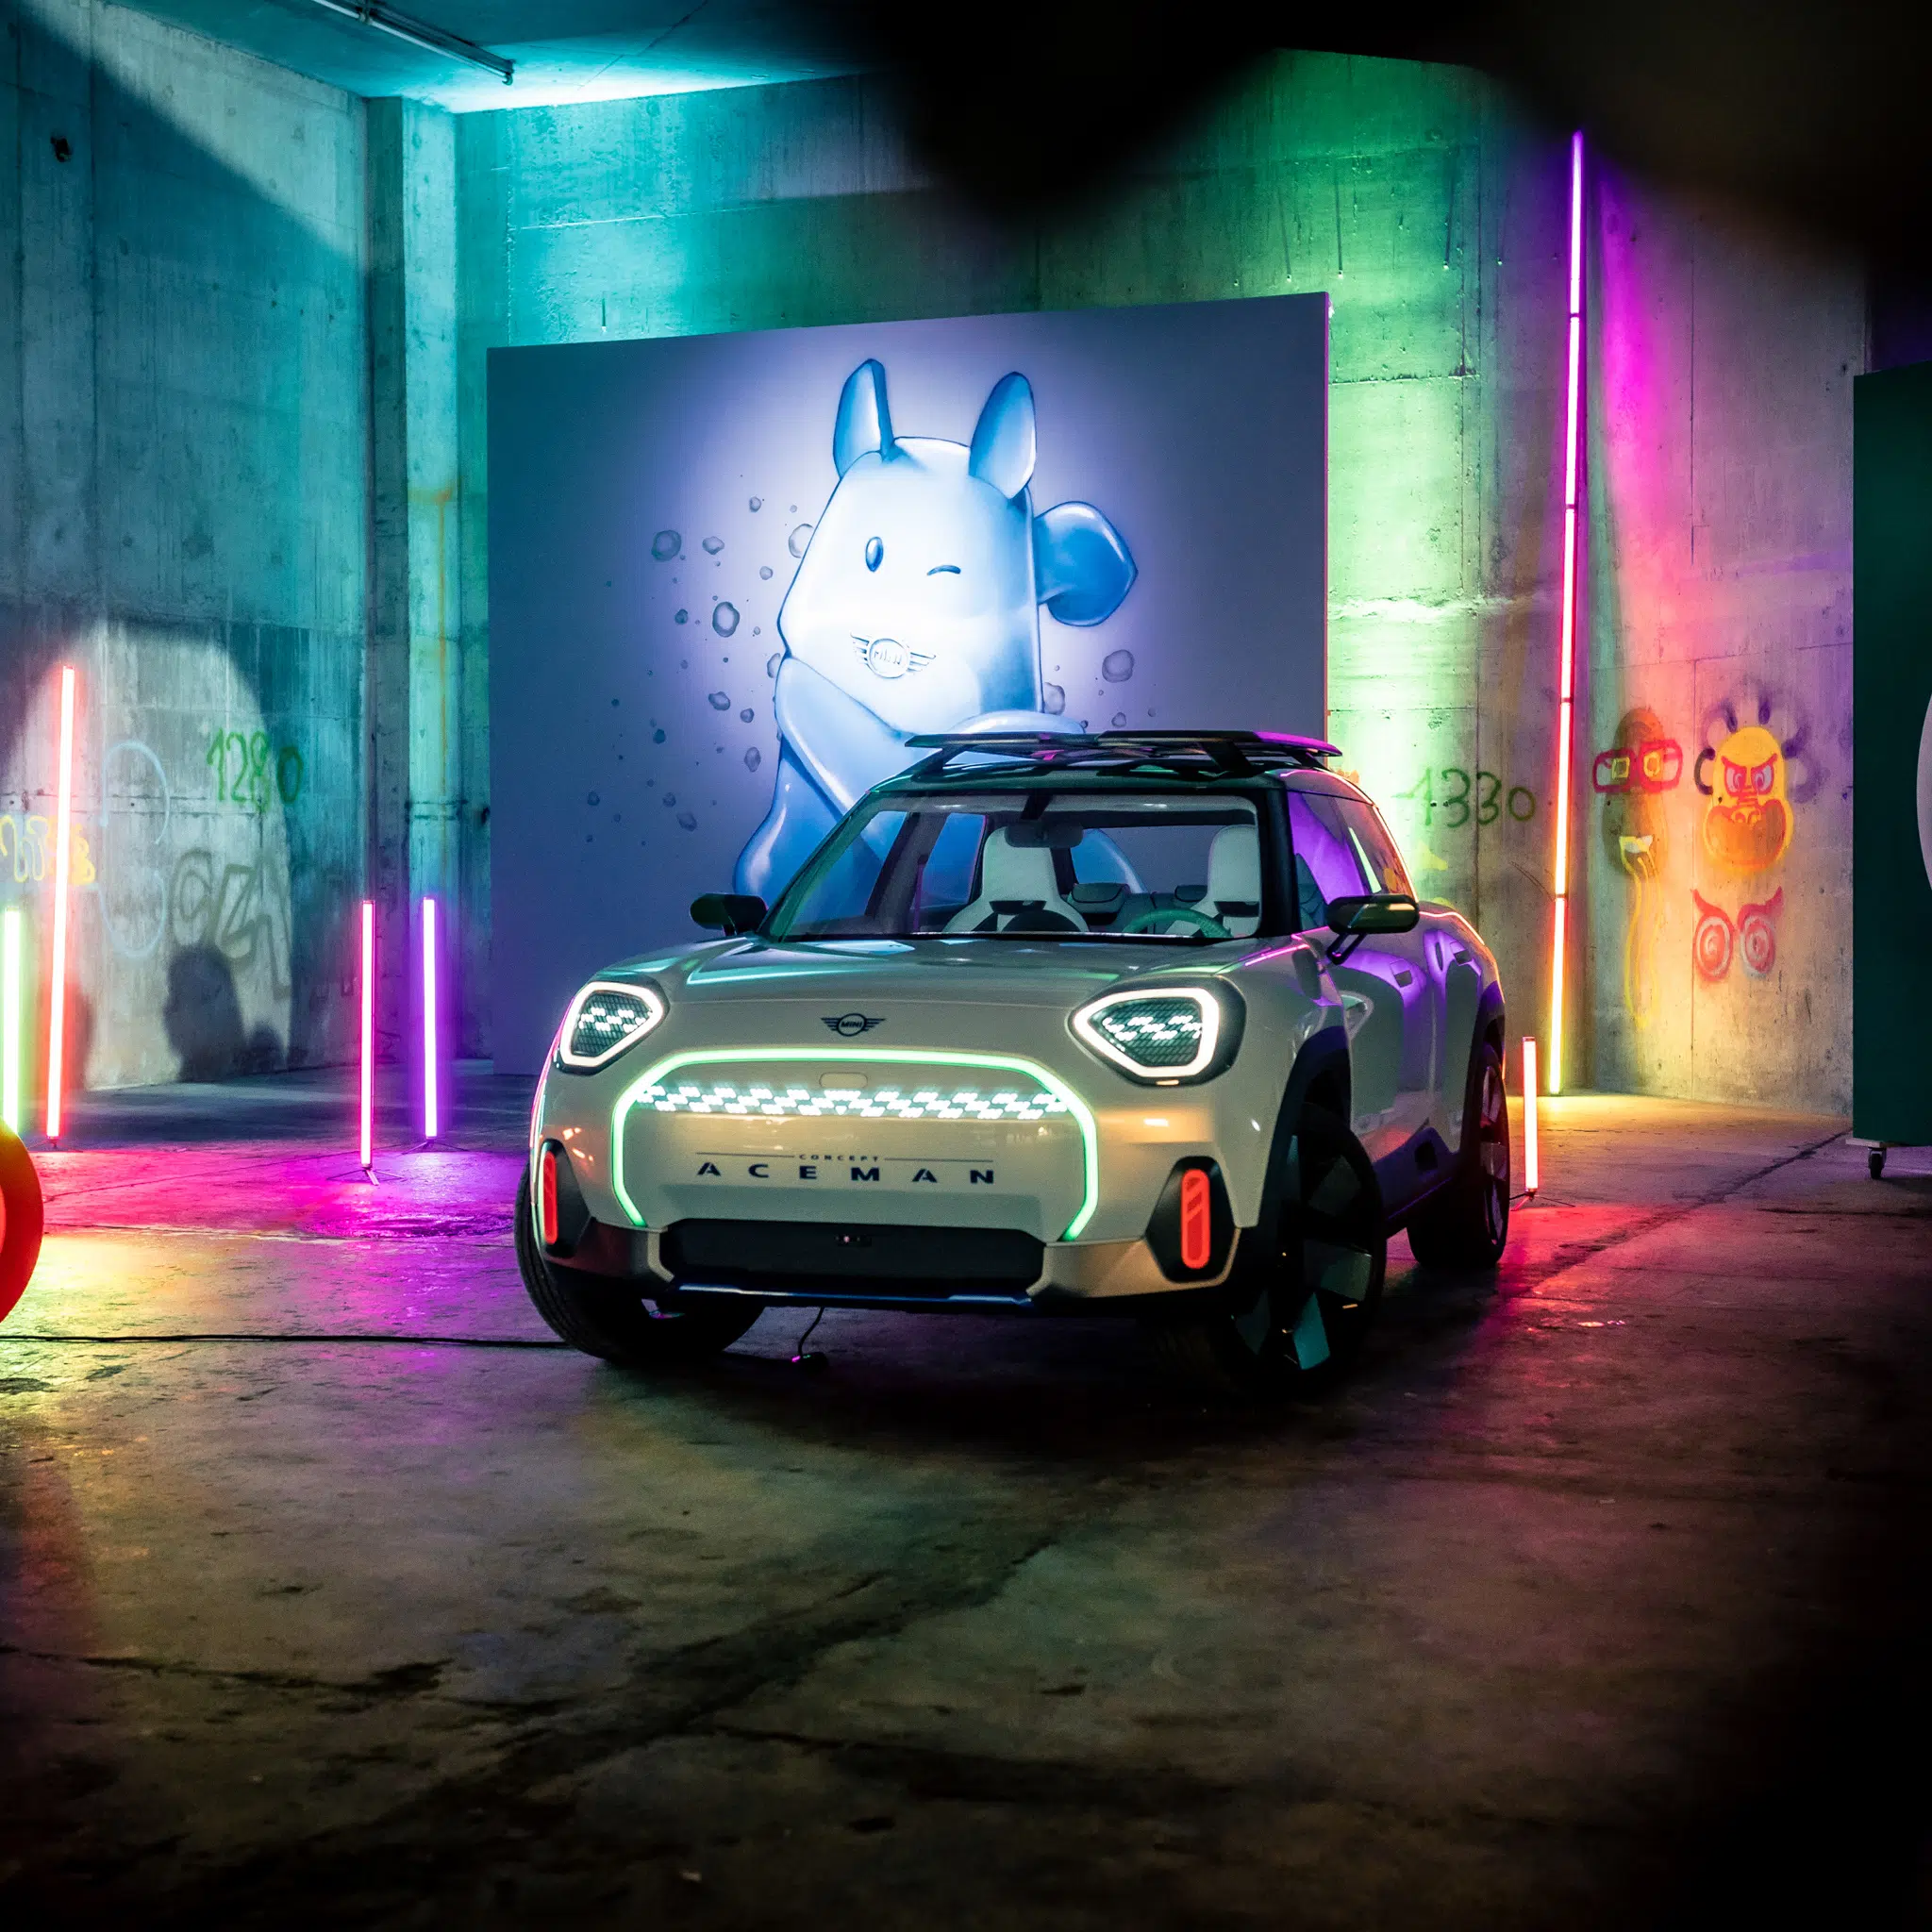 Mini Shows Off Electric Pokemon Car